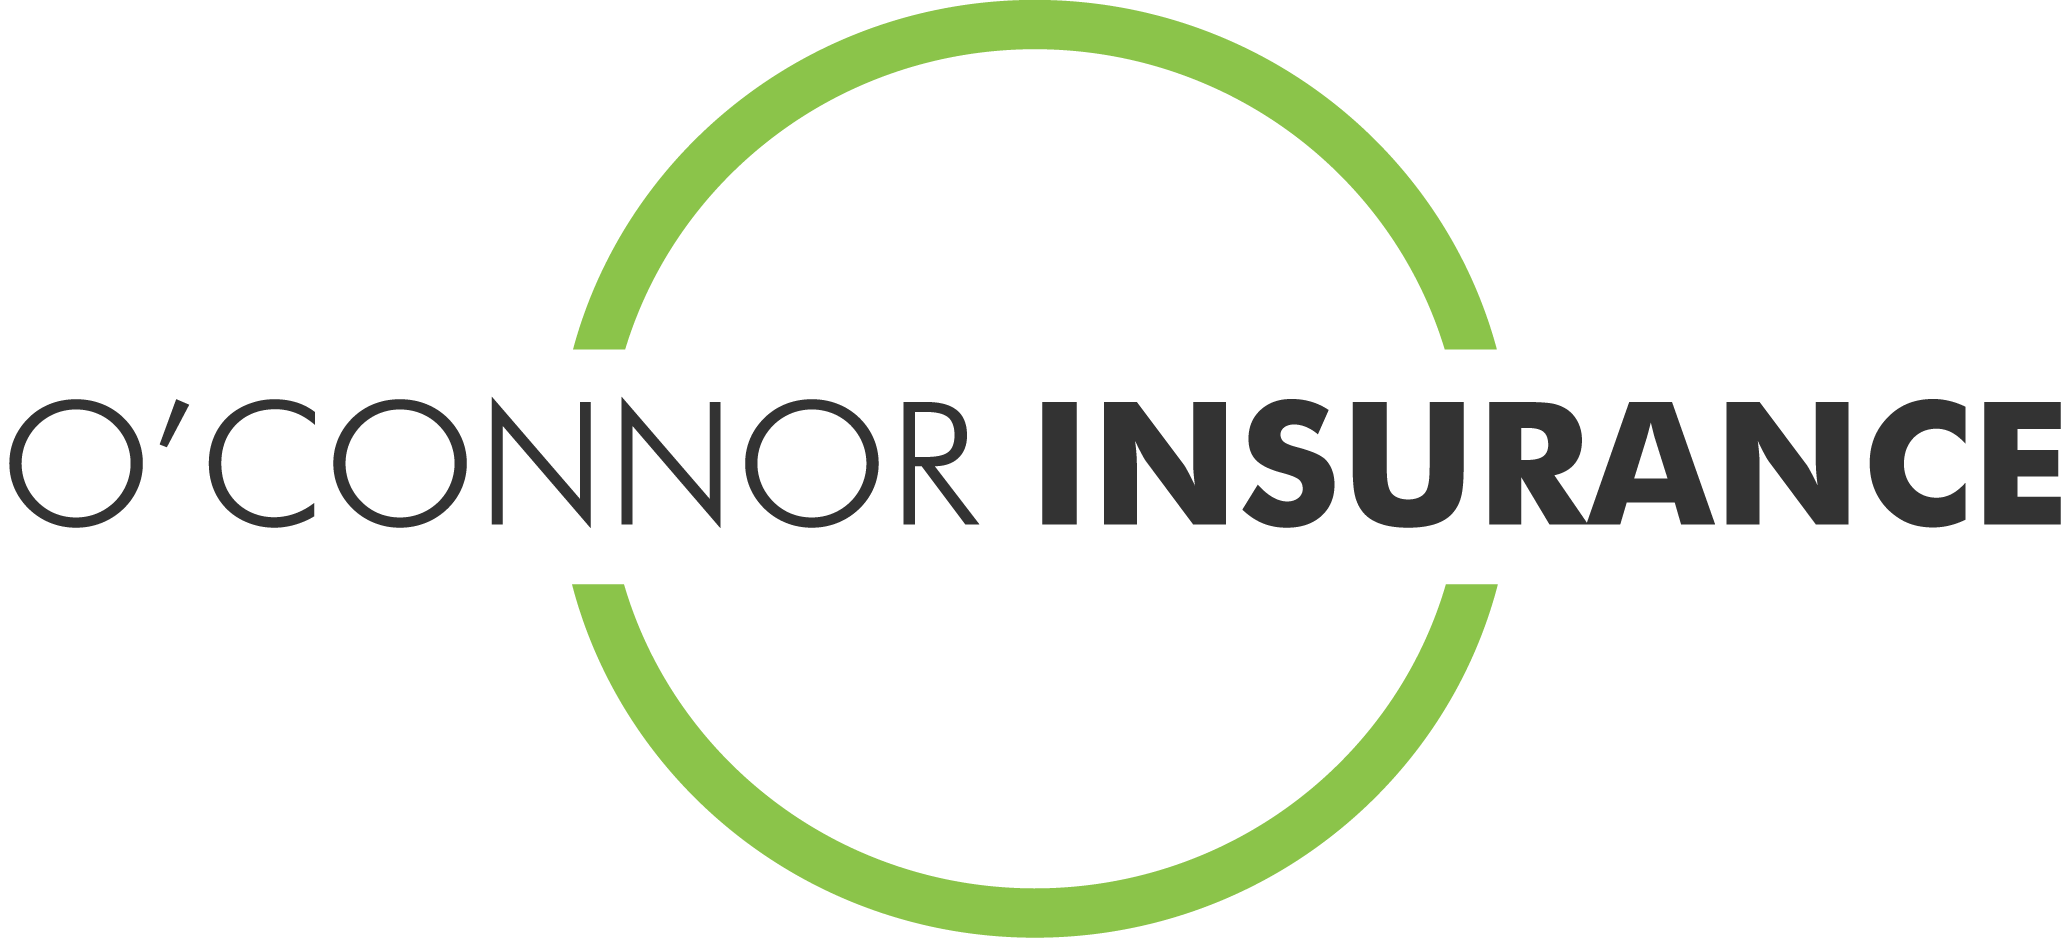 O'Connor Insurance Logo